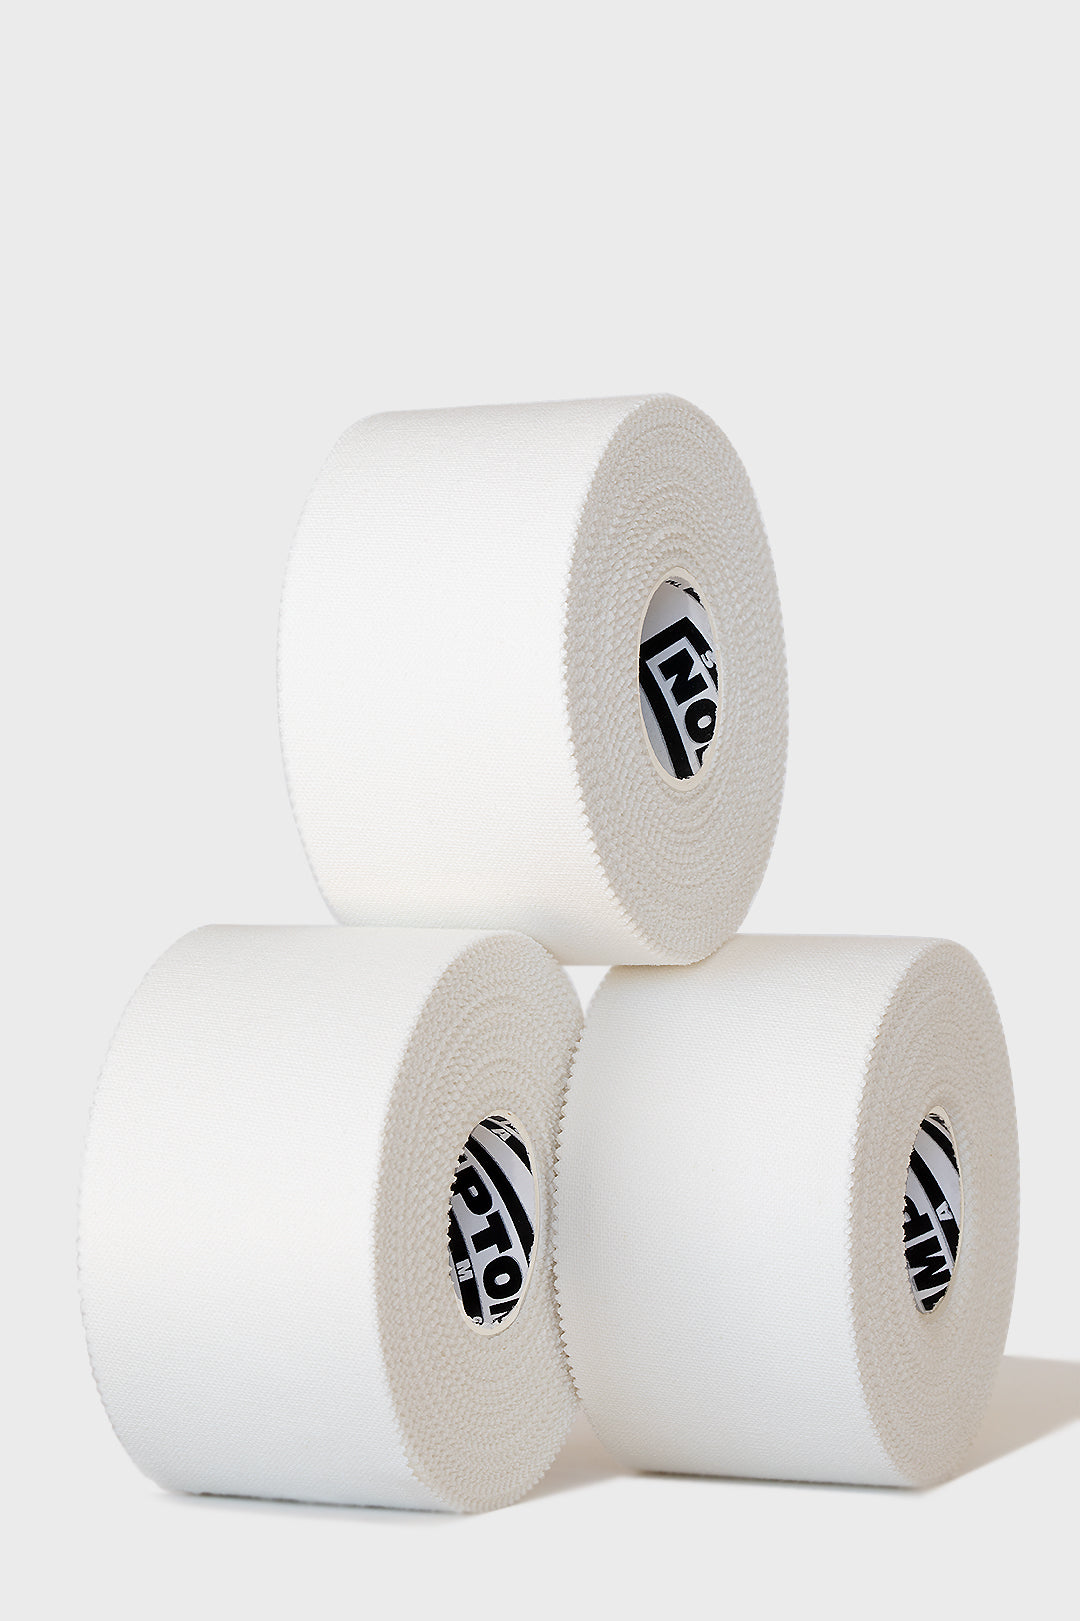 Brand: Hampton Adams Boob tape for Large Breasts, Plus Size (DD+)